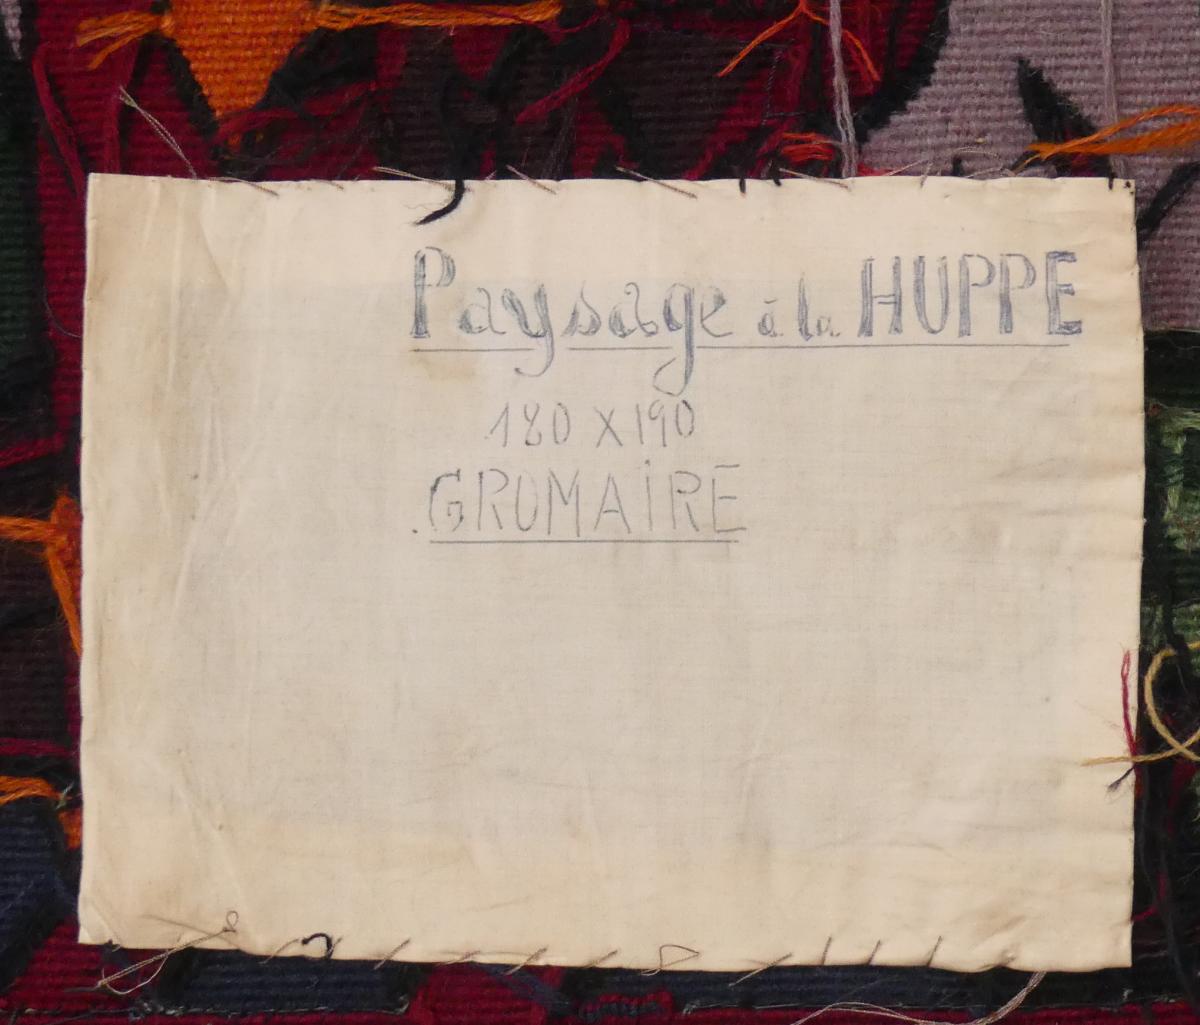 Marcel Gromaire - Landscape In La Huppe - Aubusson Tapestry-photo-4